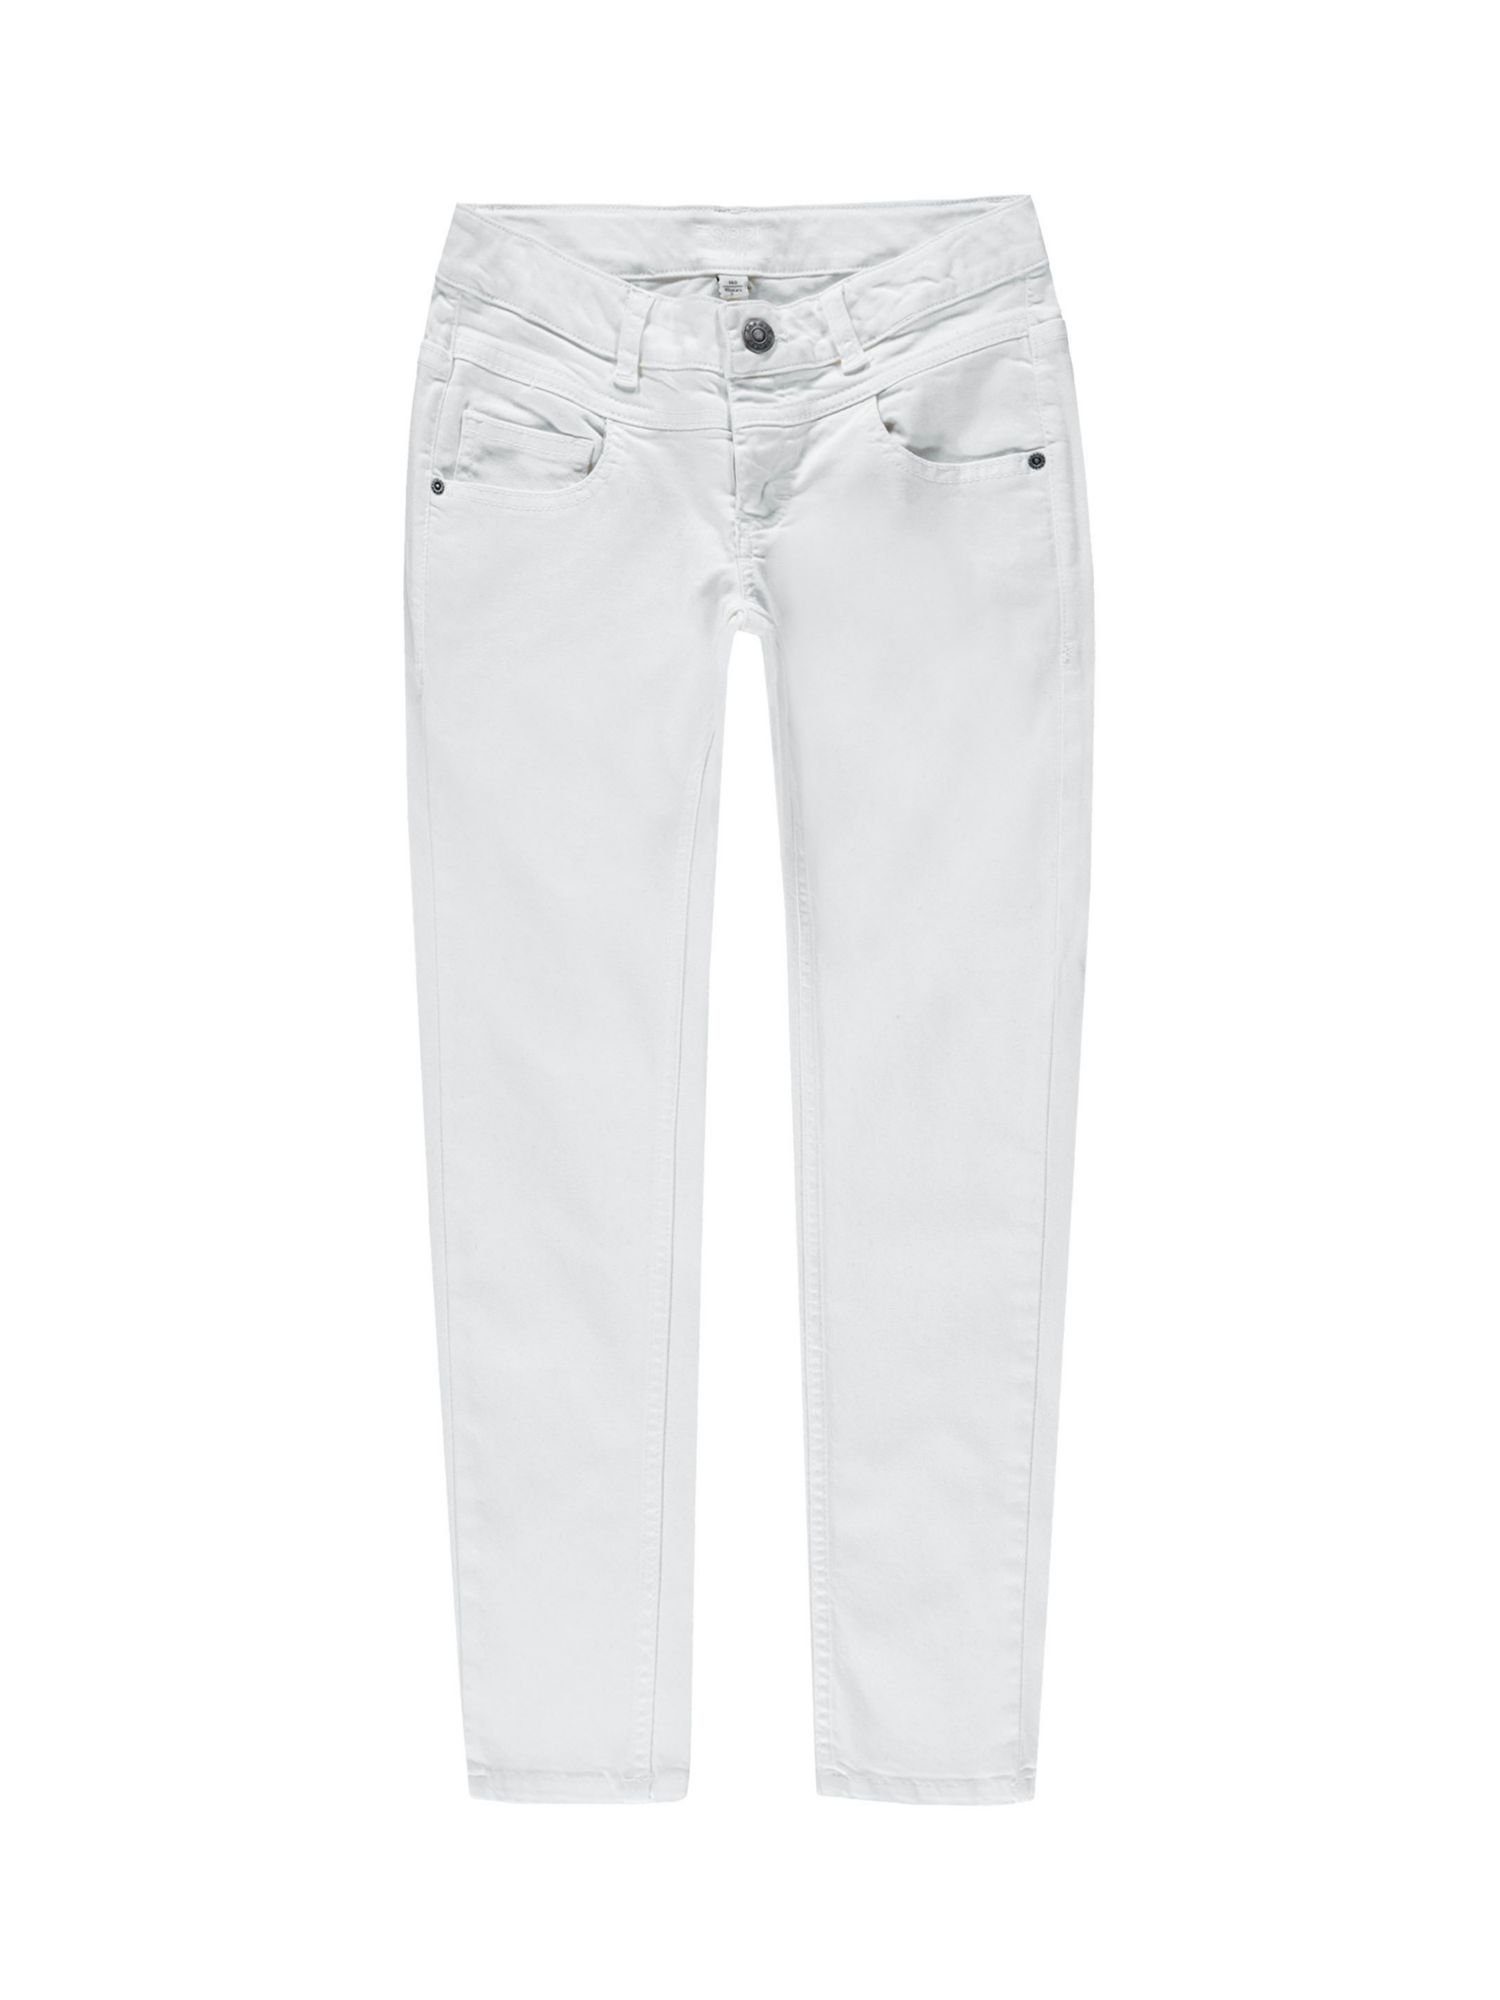 WHITE denim Esprit Pants Stretch-Jeans